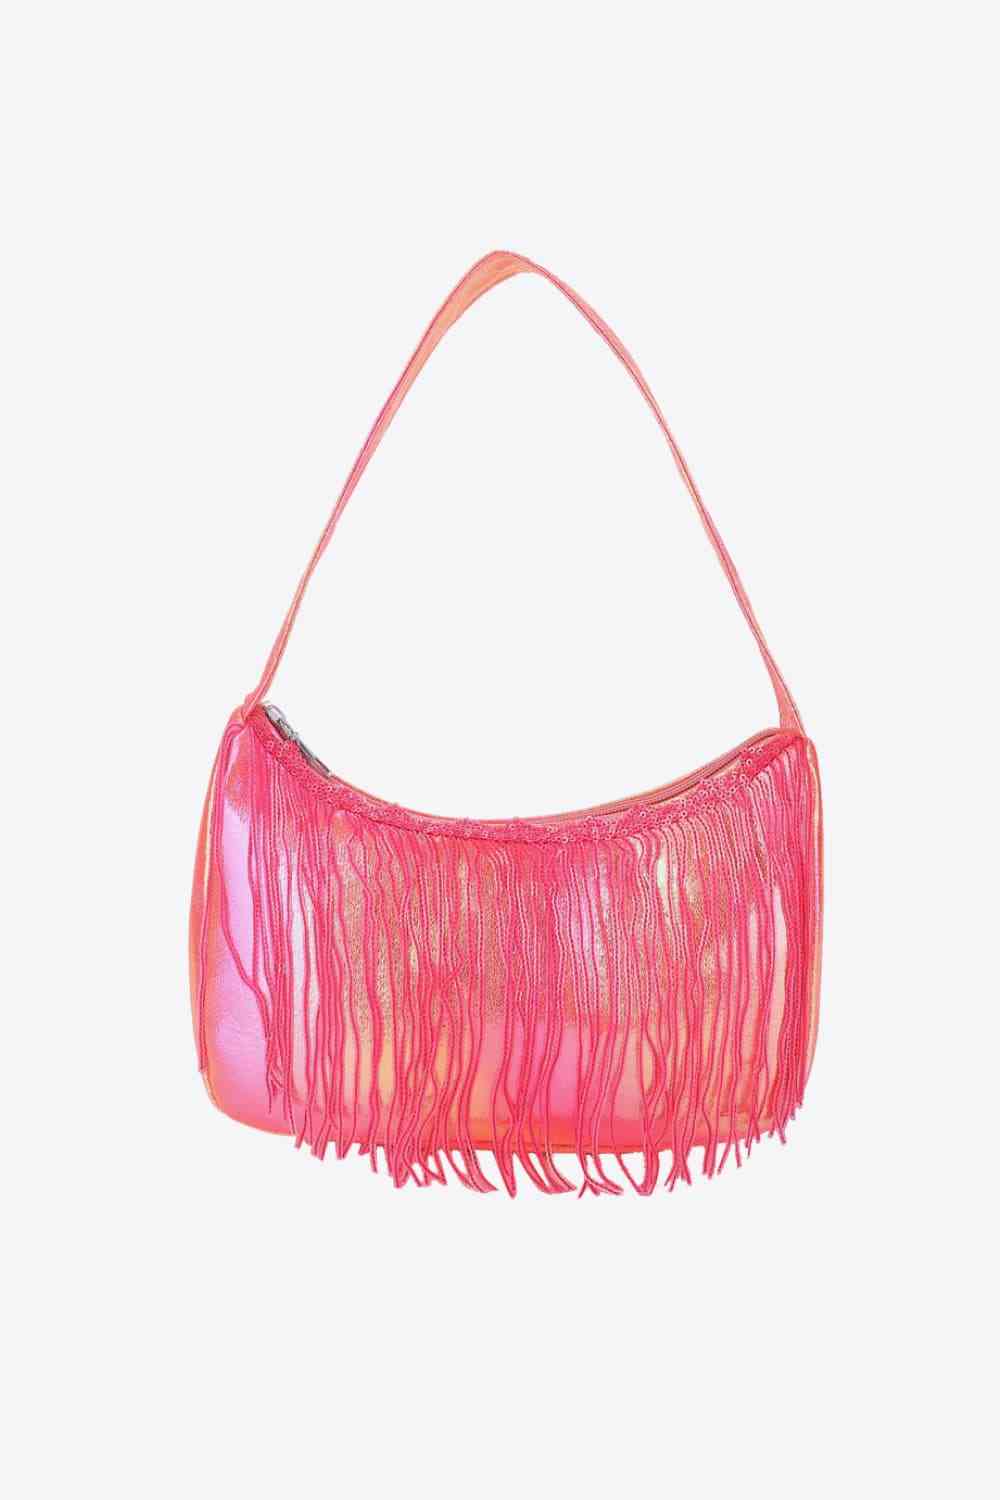 Fringe Detail Handbag - Pink / One Size - Women Bags & Wallets - Handbags - 9 - 2024